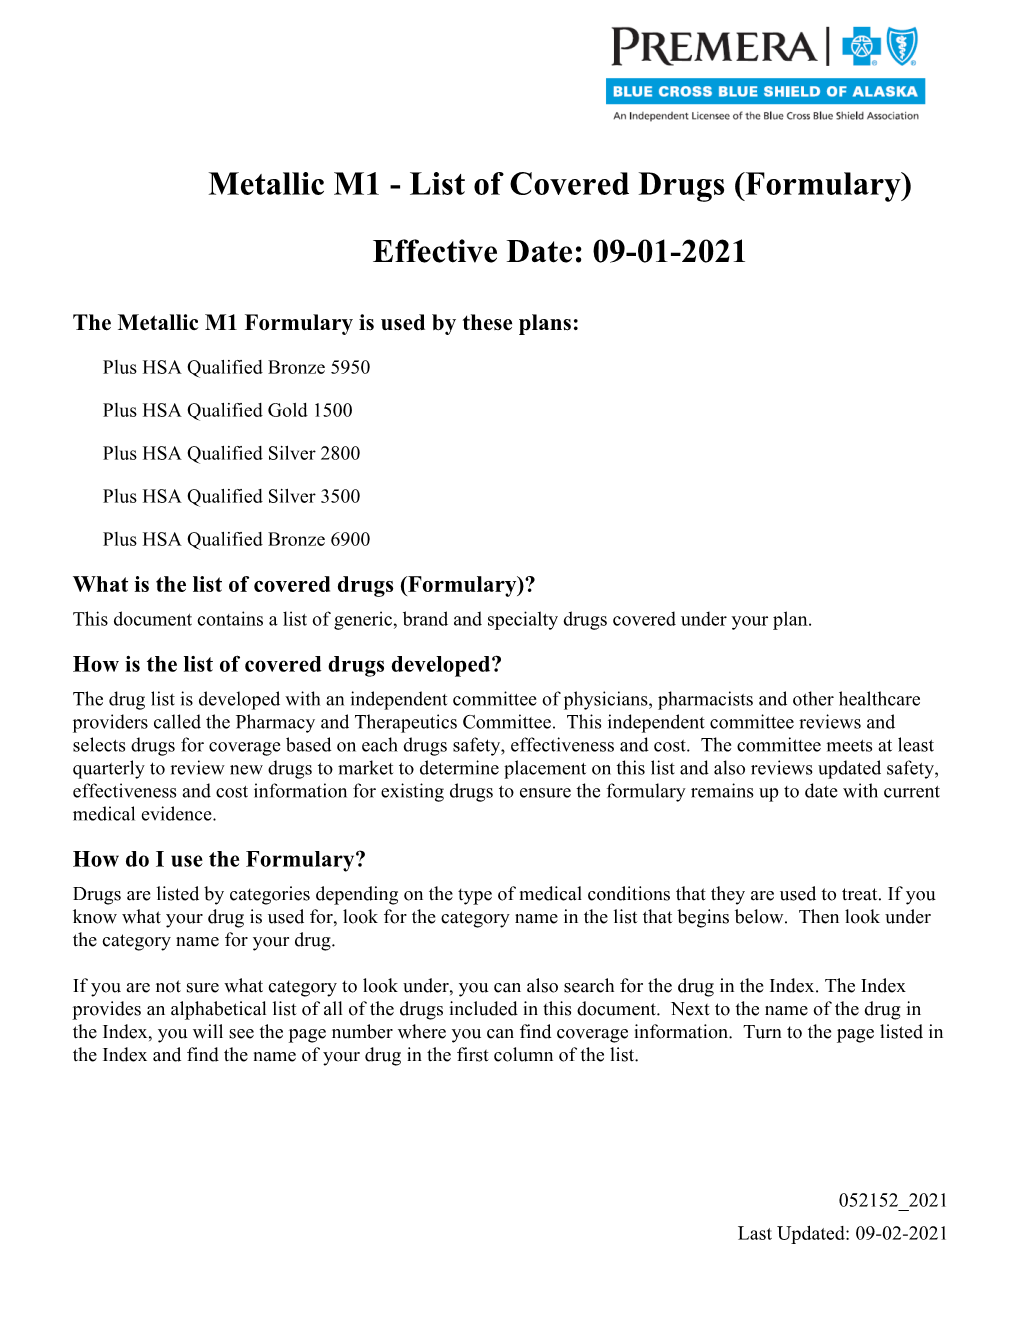 M1 Covered Drug List